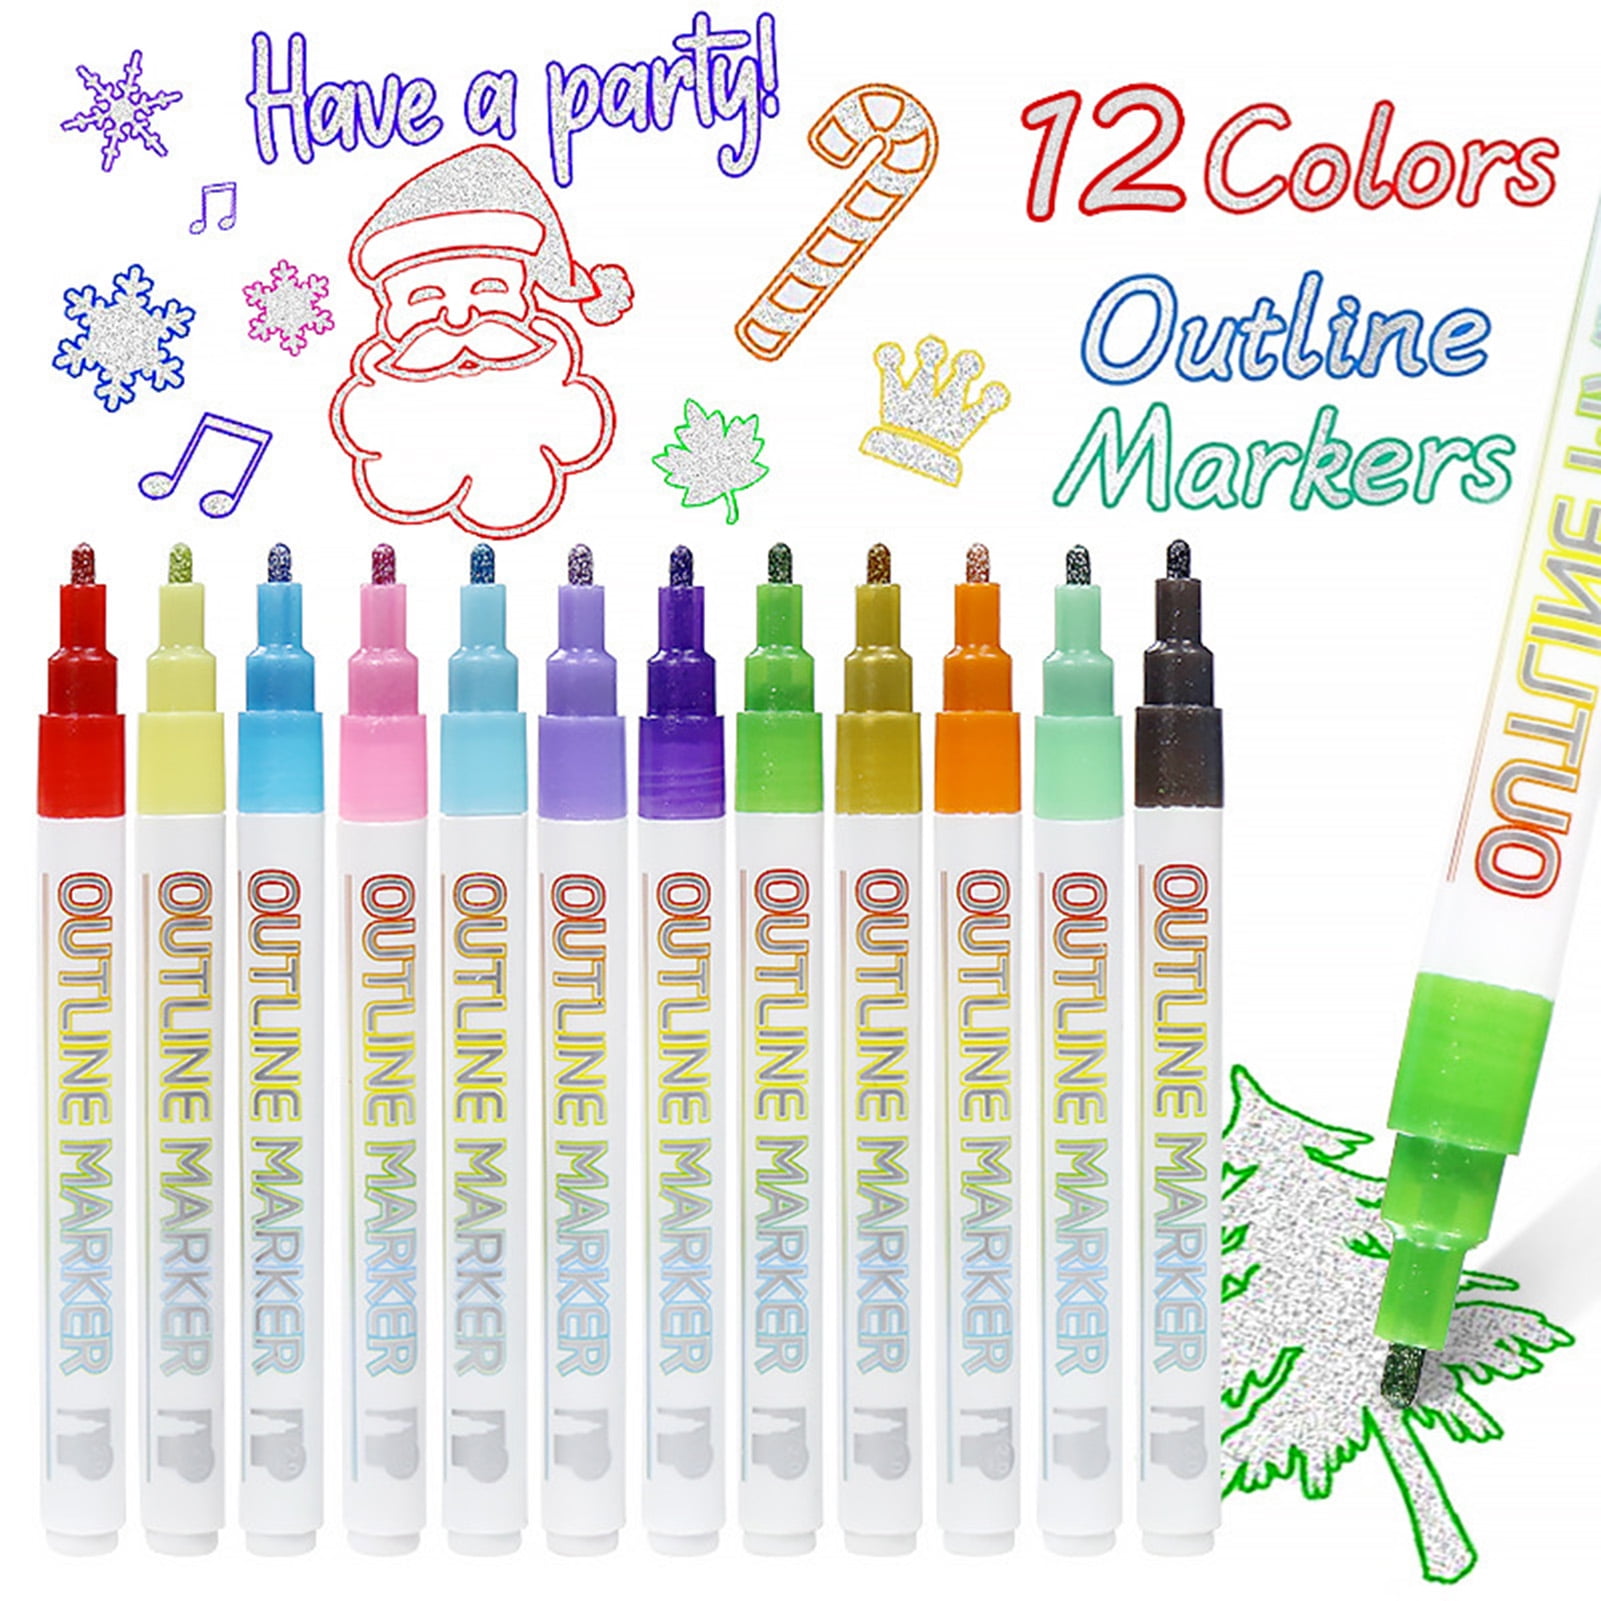 Li'l Hands Coloring Pens 12 Colors - Department Store